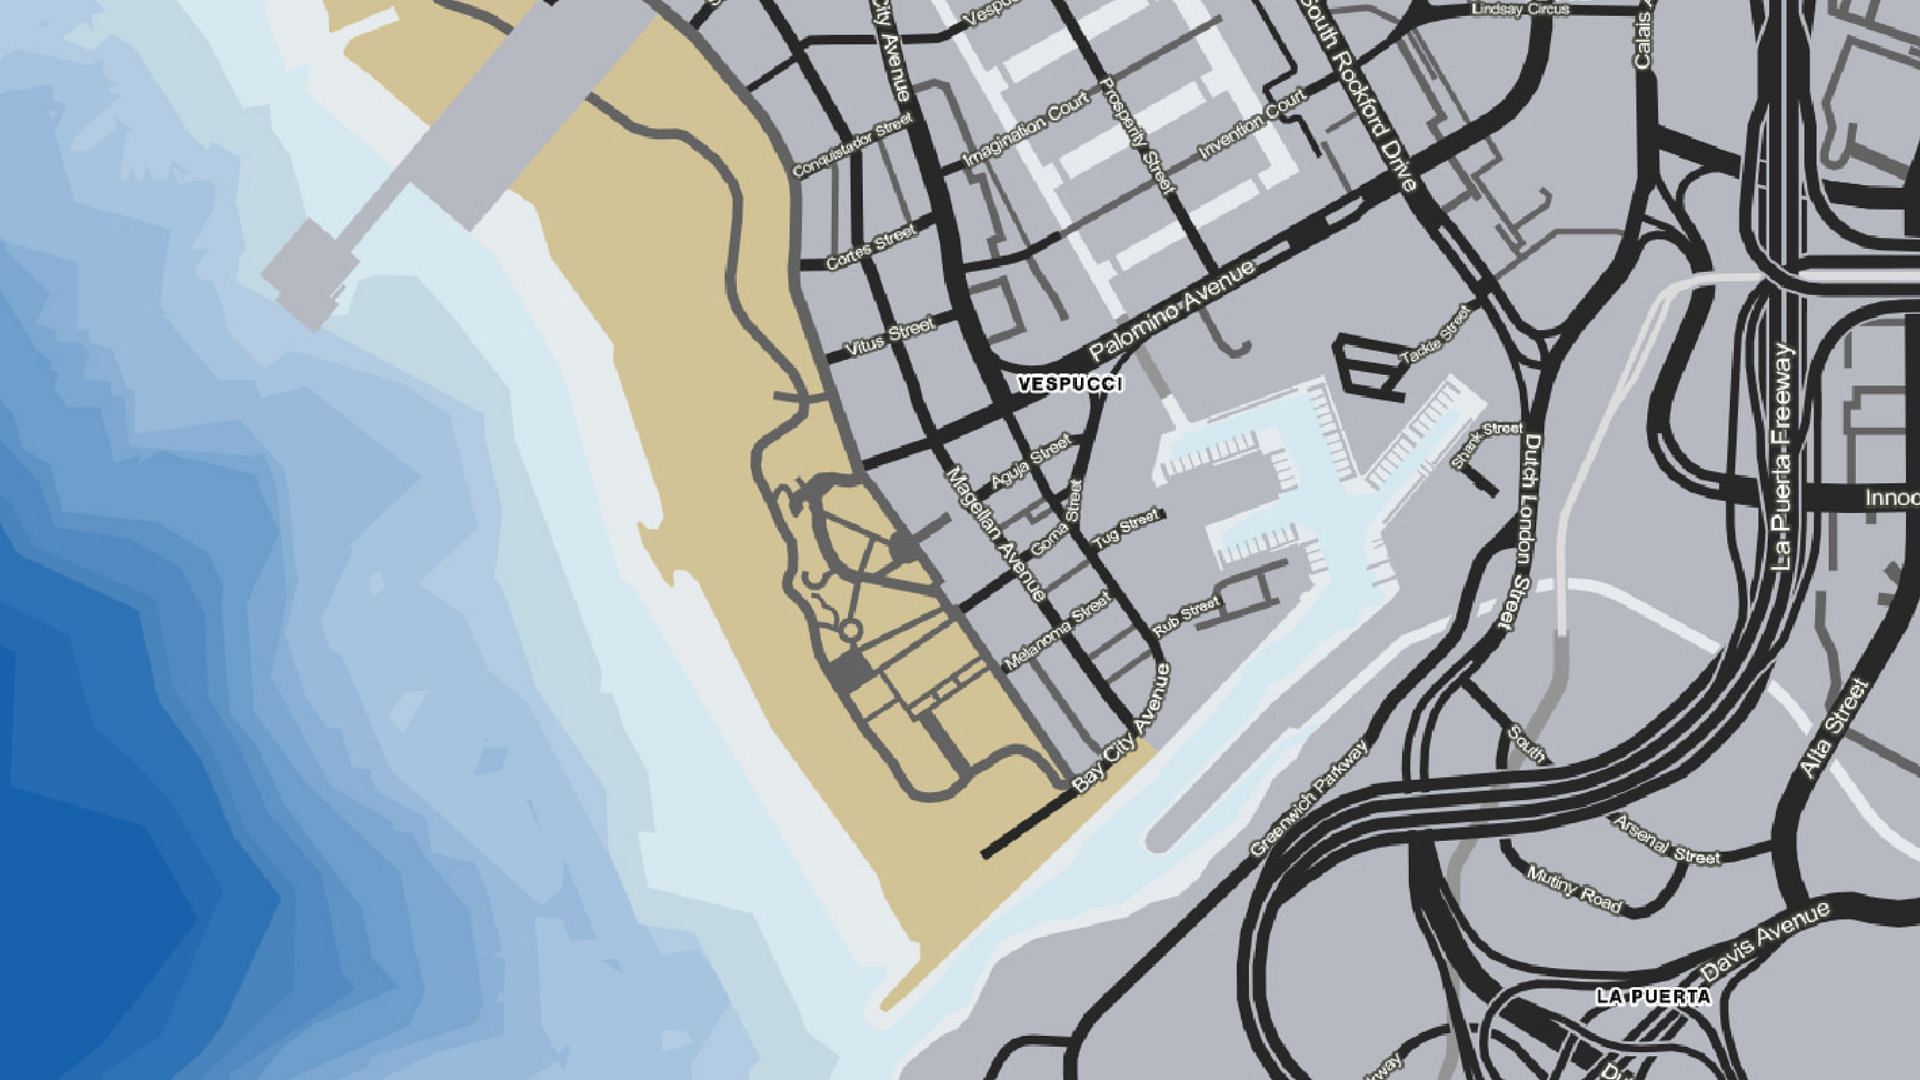 The Vespucci Beach area in Grand Theft Auto Online (Image via Sportskeeda)